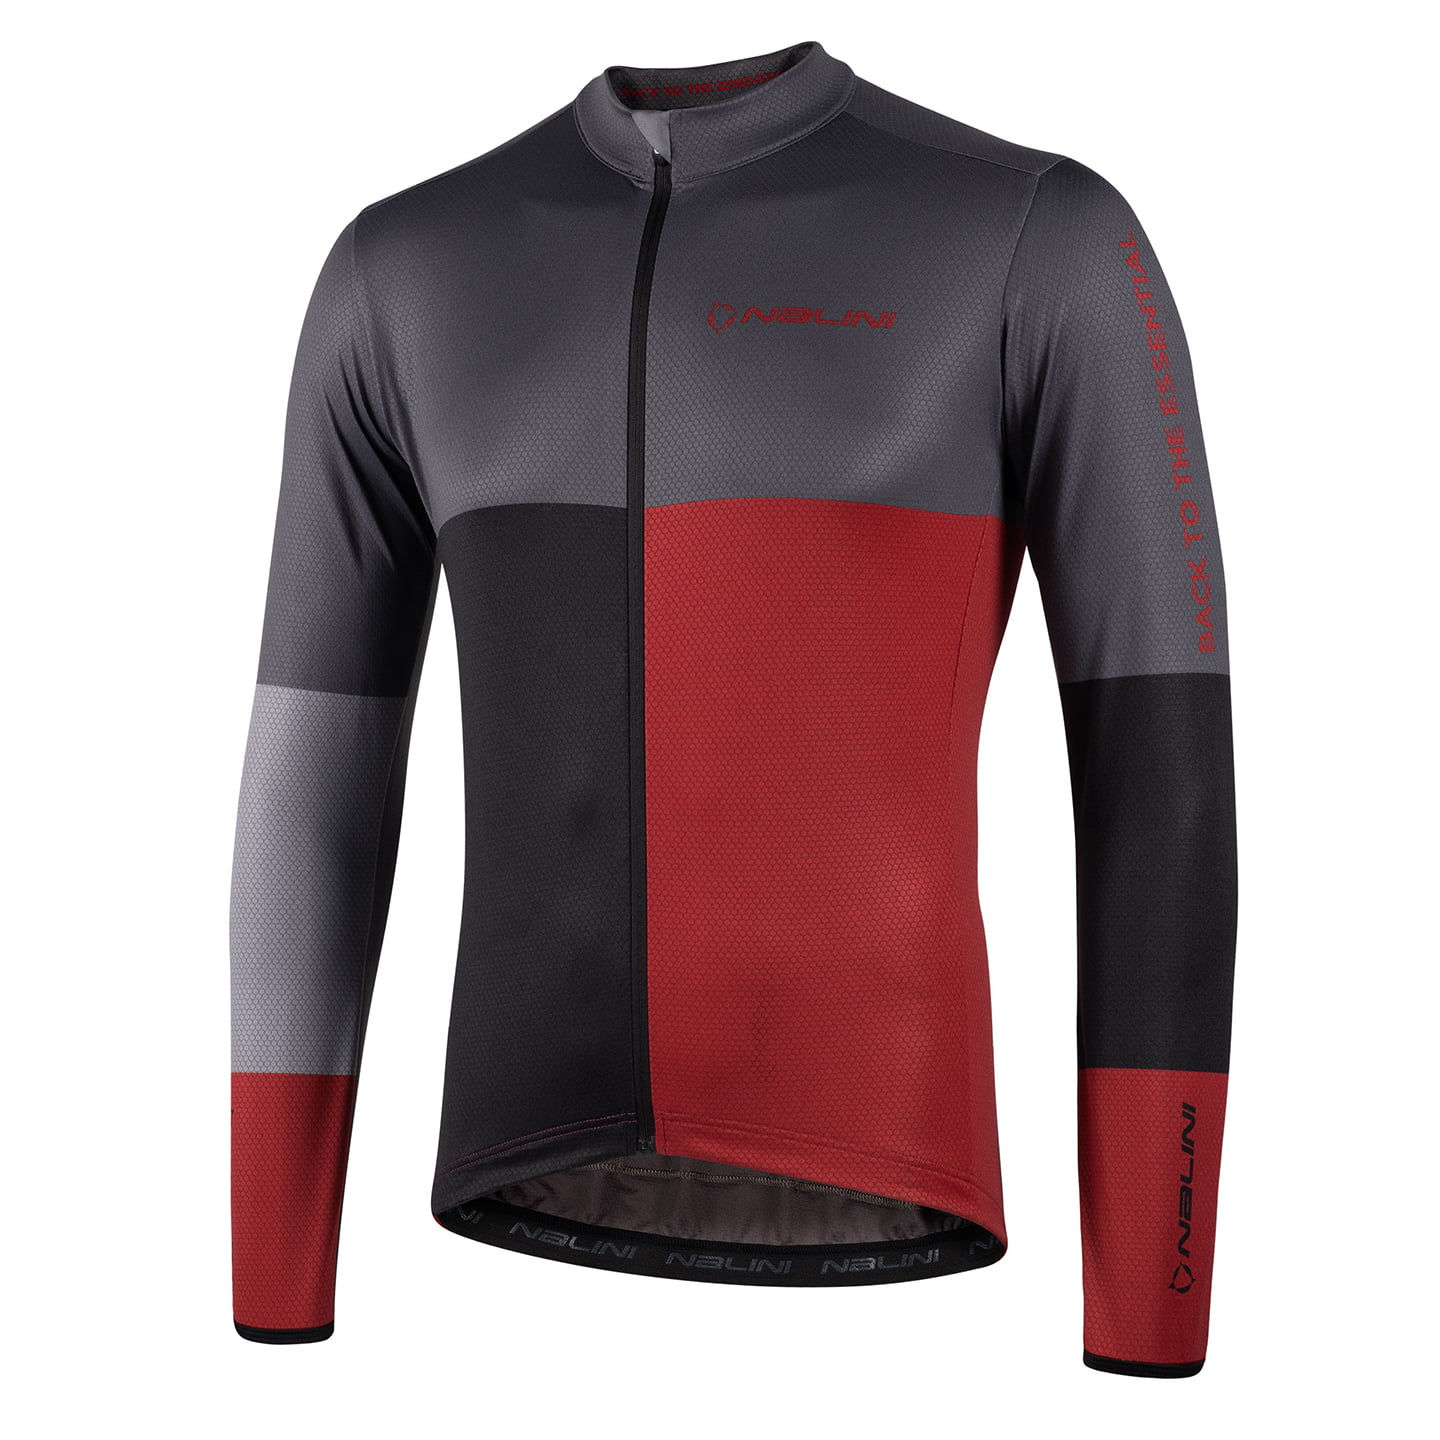 NALINI New Coffee Long Sleeve Jersey Long Sleeve Jersey, for men, size M, Cycling jersey, Cycling clothing